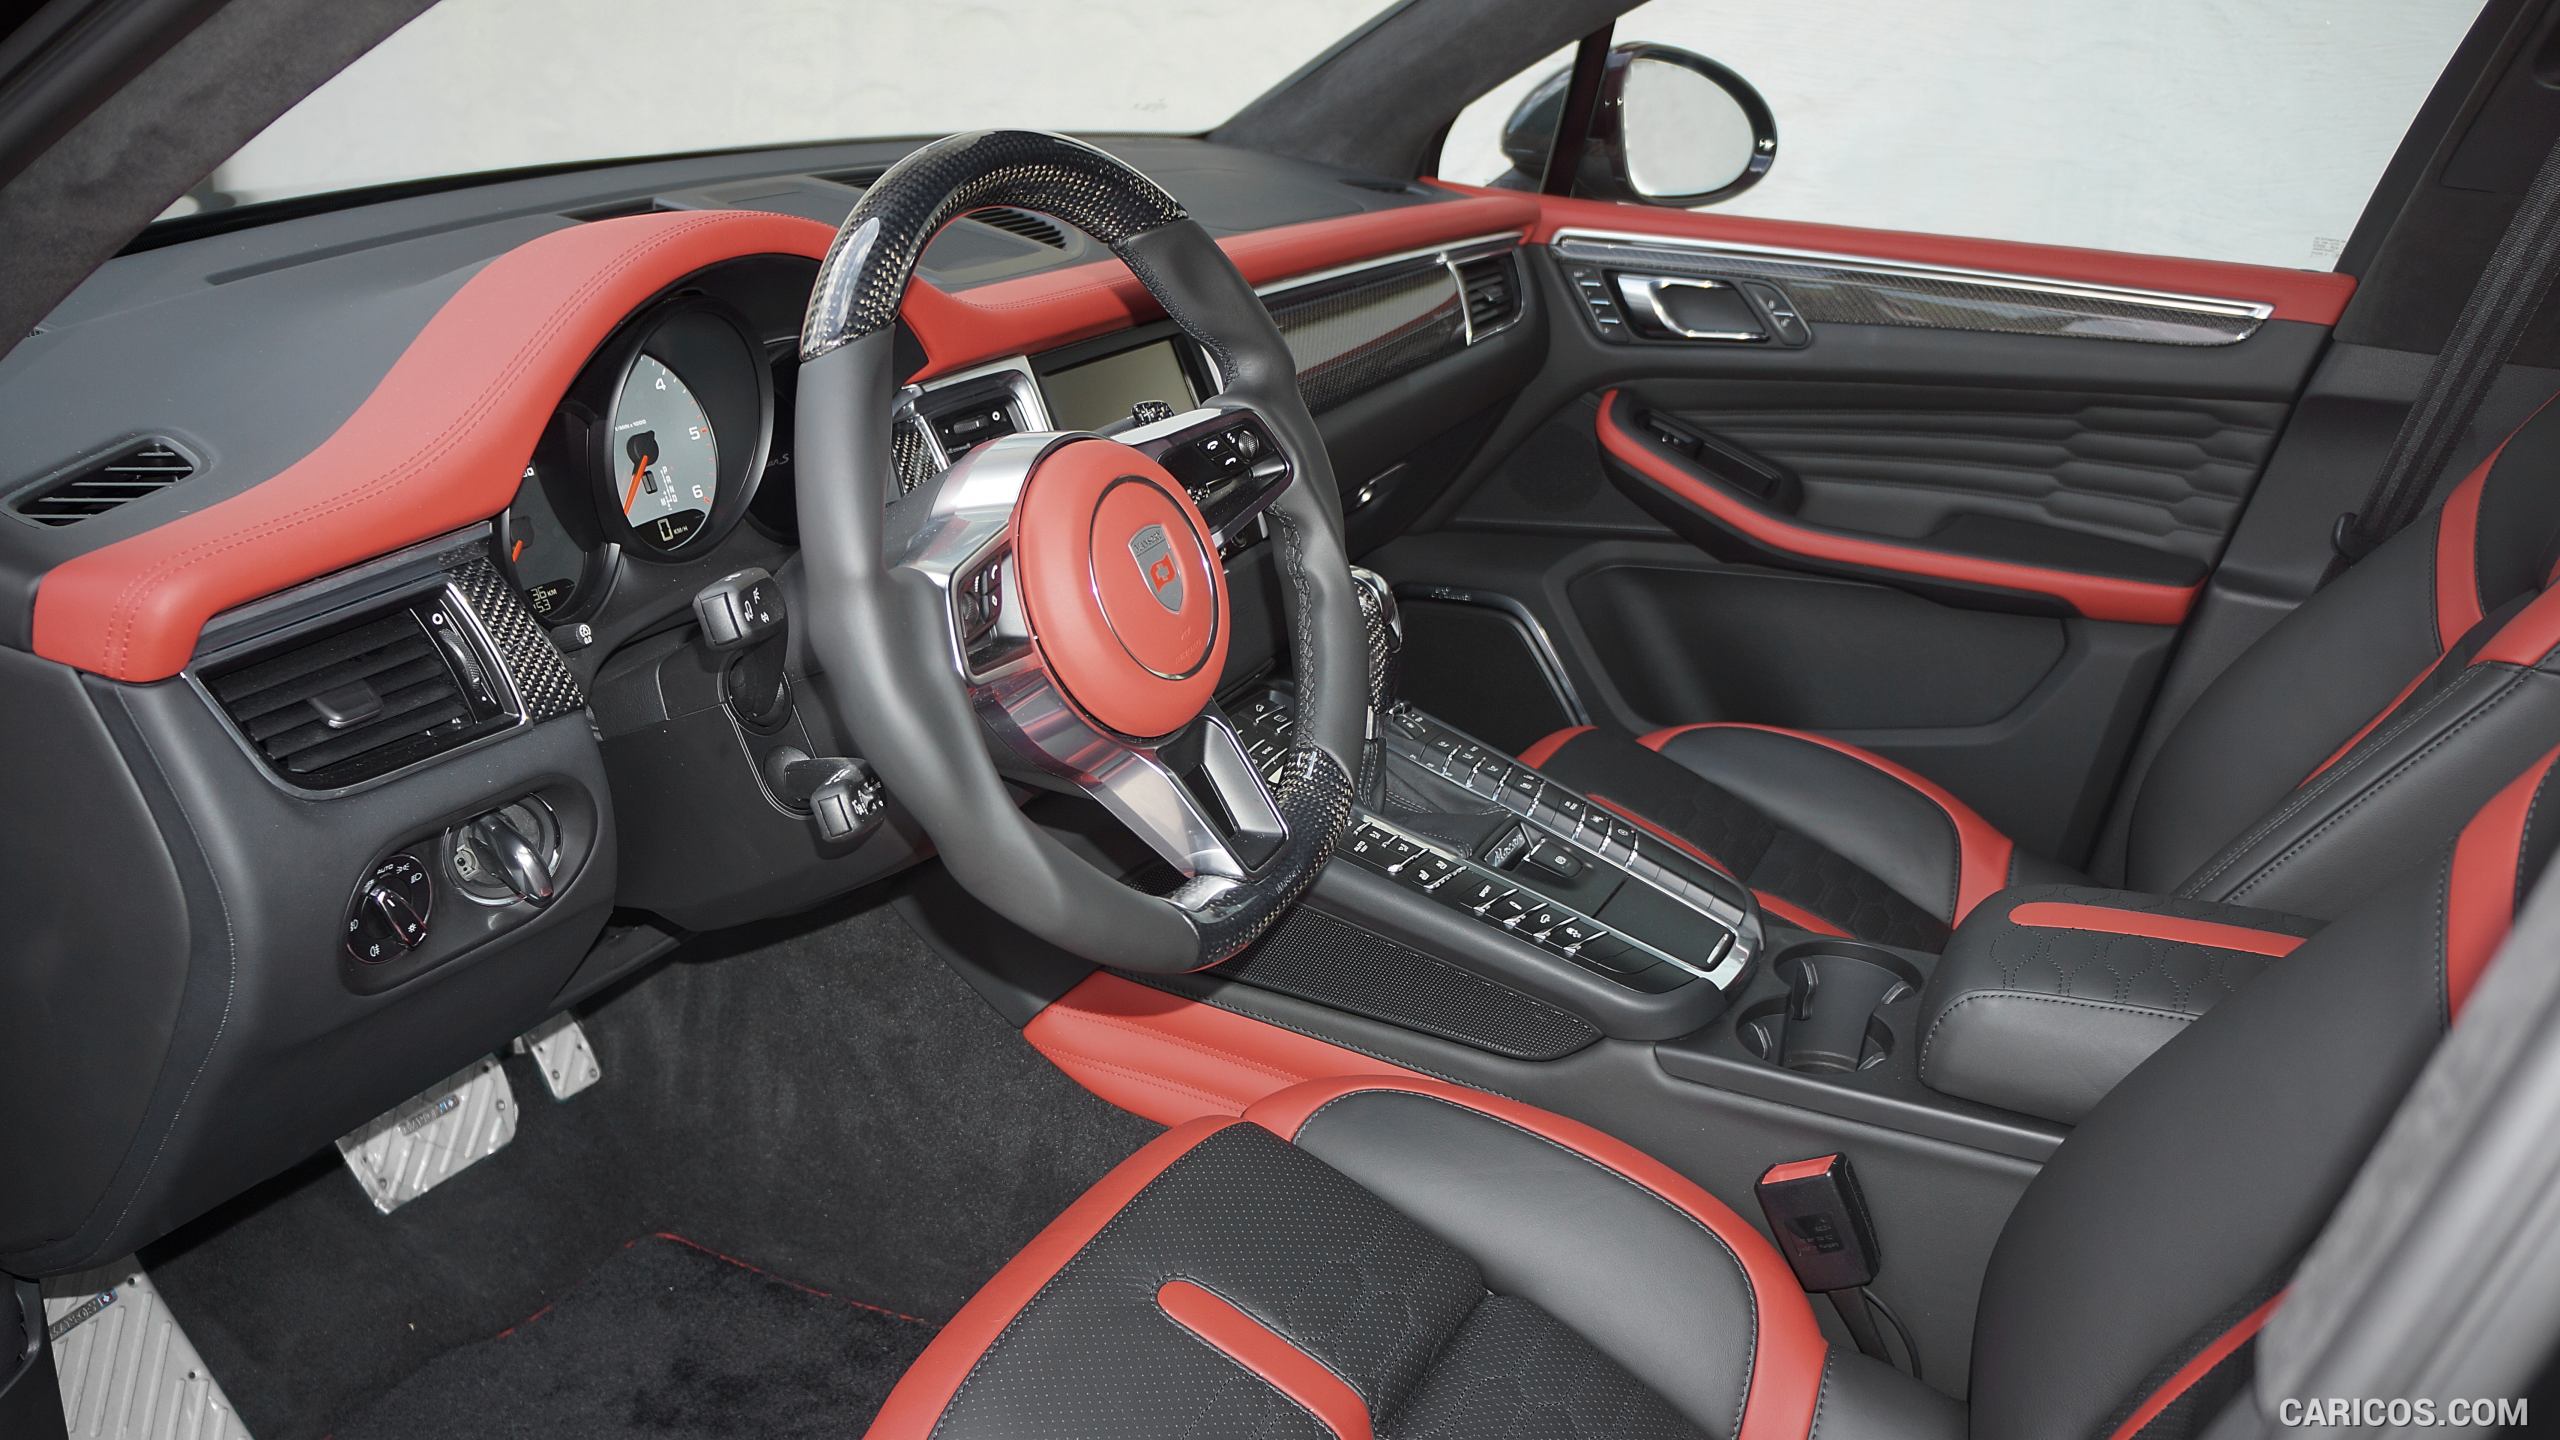 2015 MANSORY Porsche Macan - Interior, #7 of 10